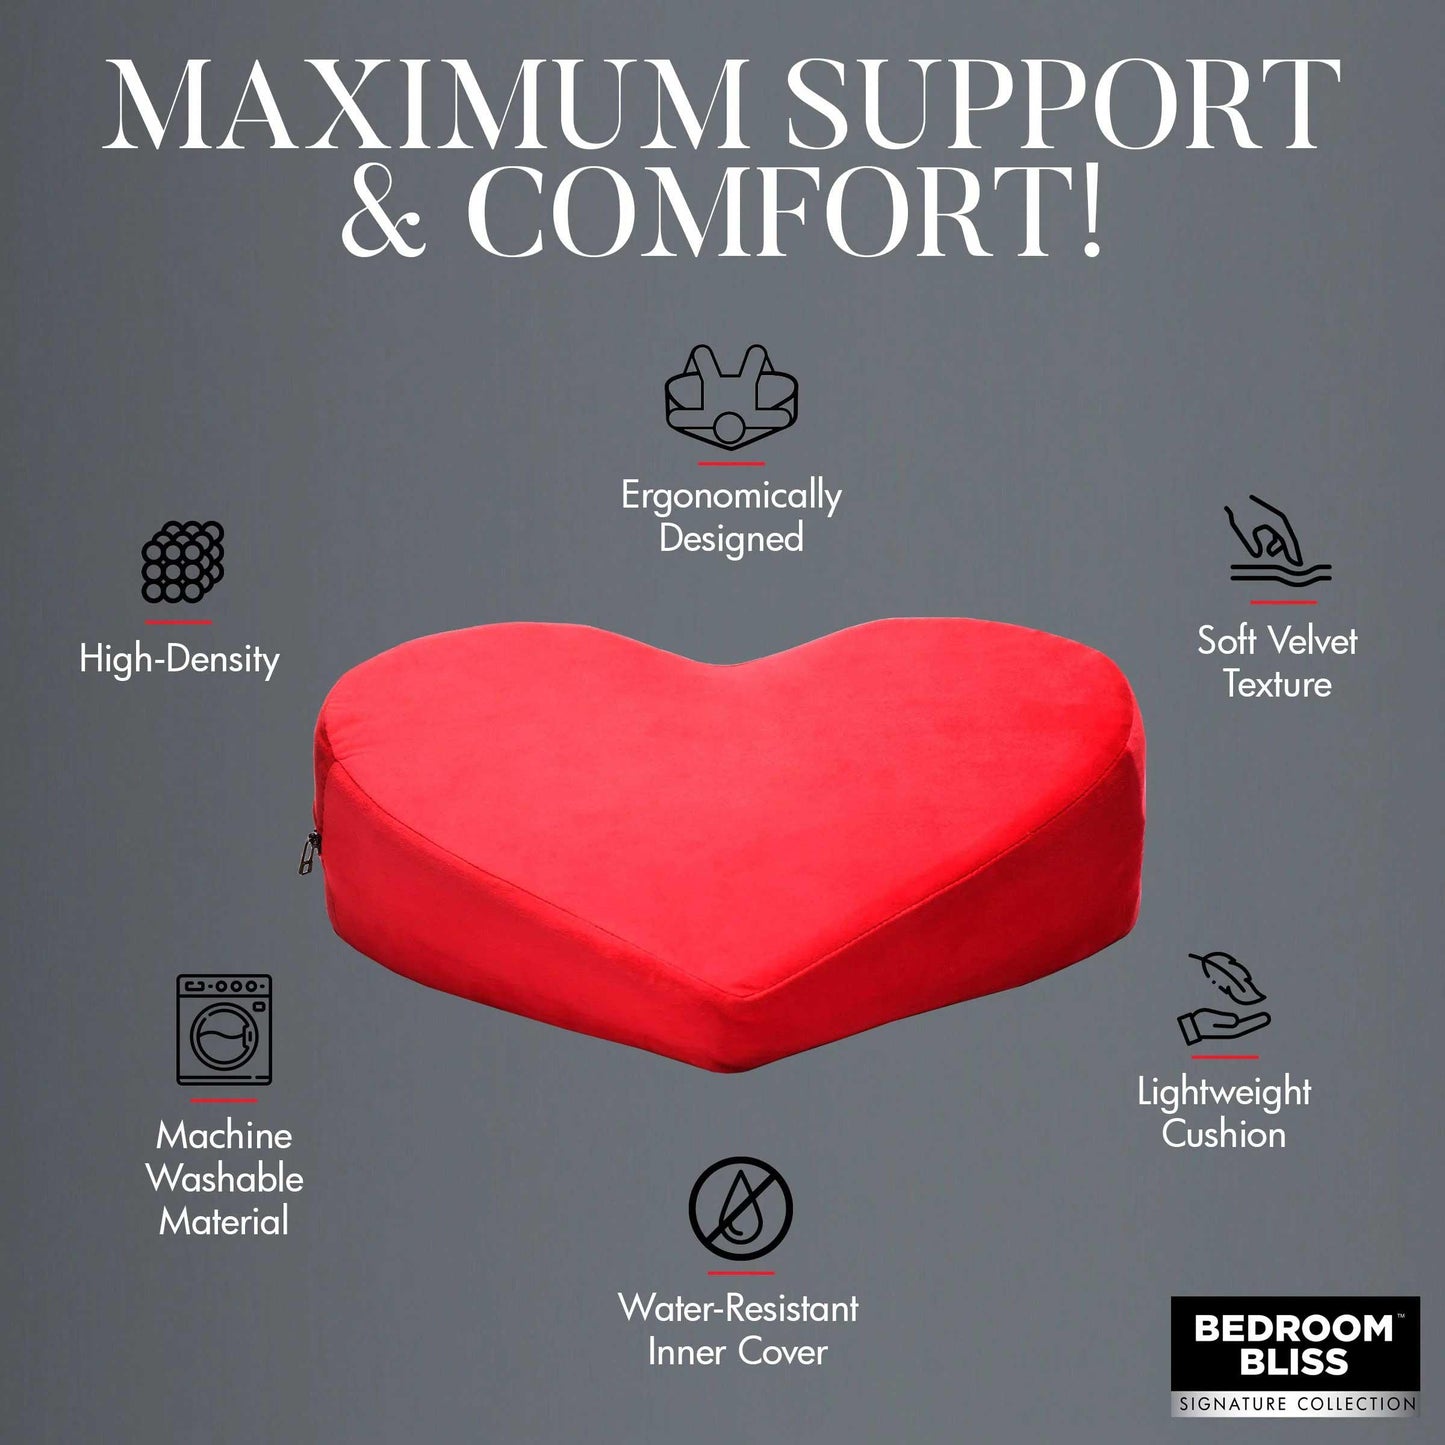 Love Pillow Heart Pillow - Red - My Sex Toy Hub